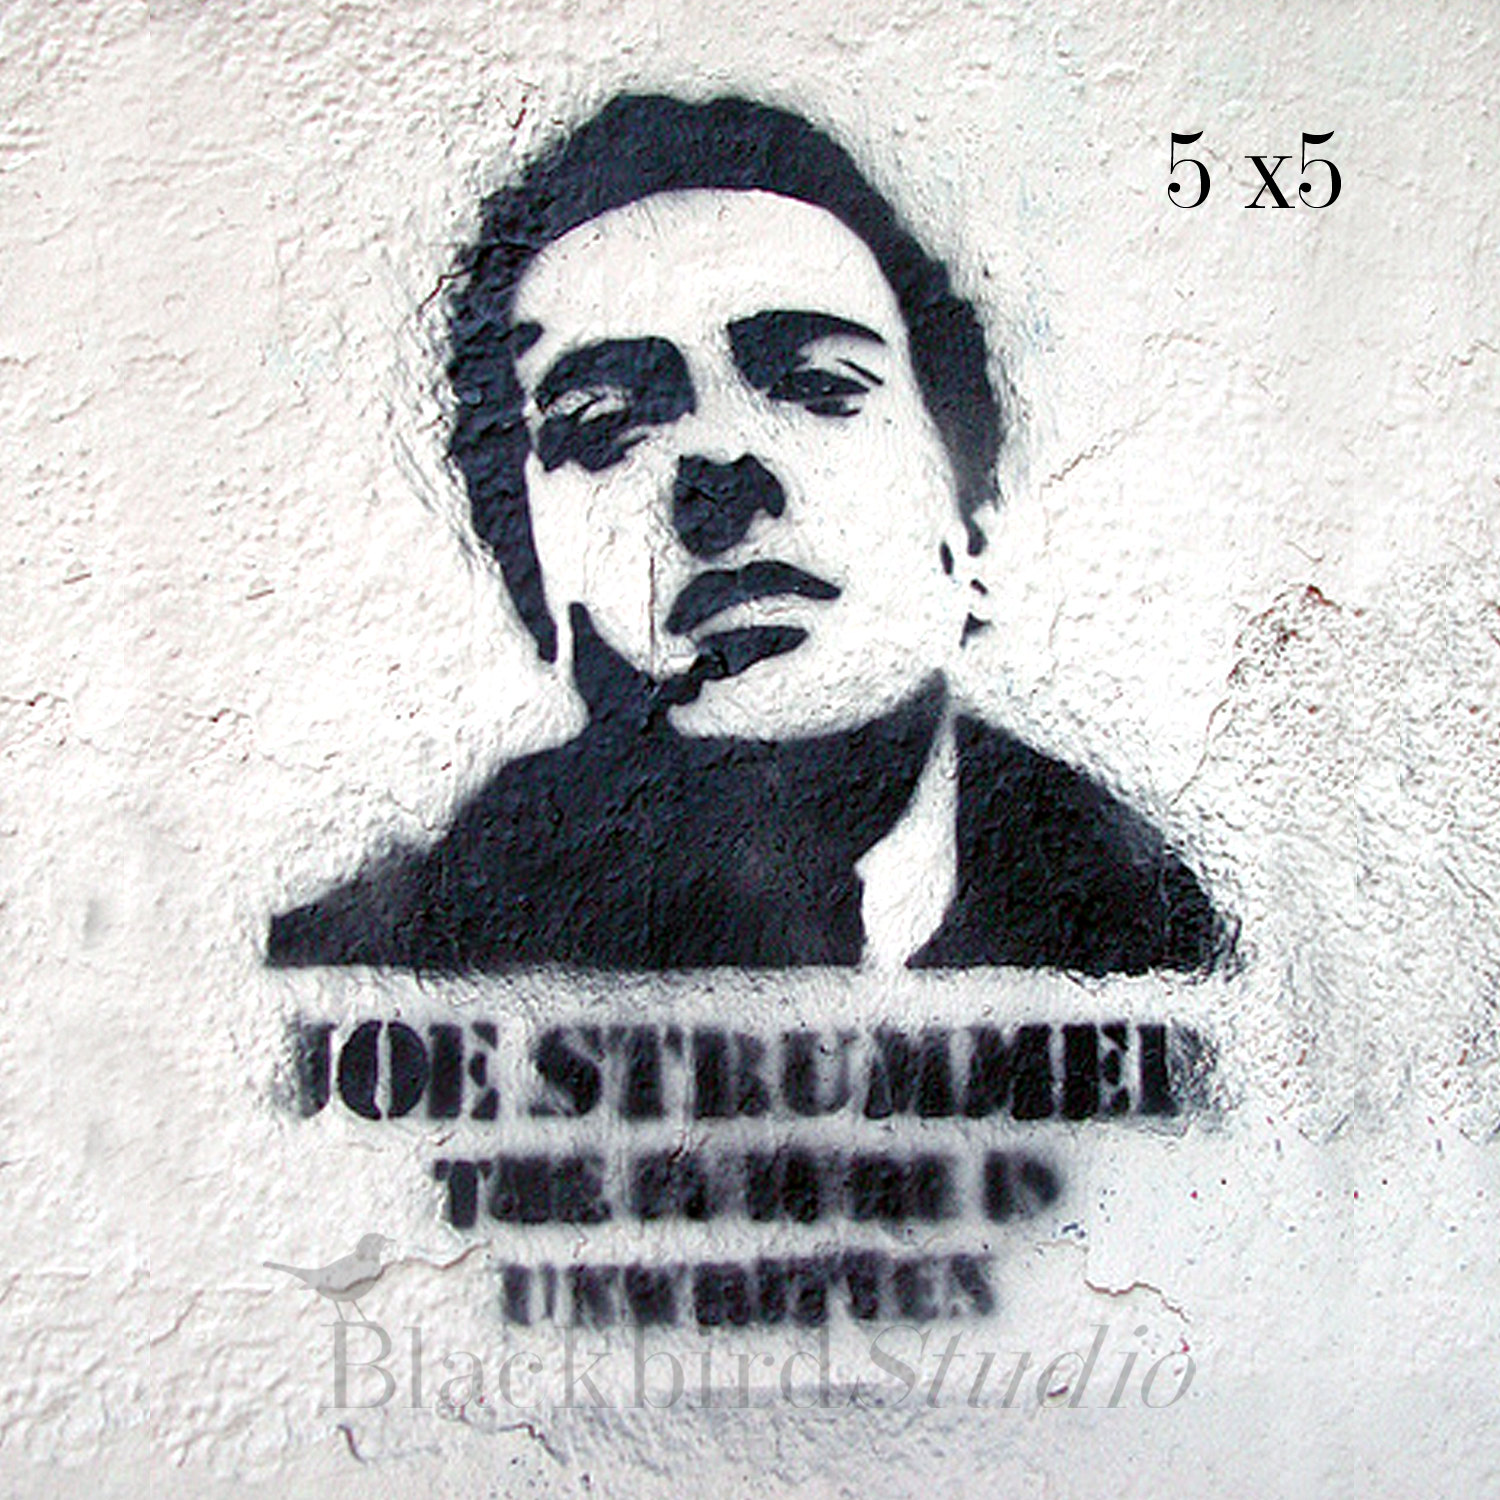 1500x1500 > Joe Strummer: The Future Is Unwritten Wallpapers